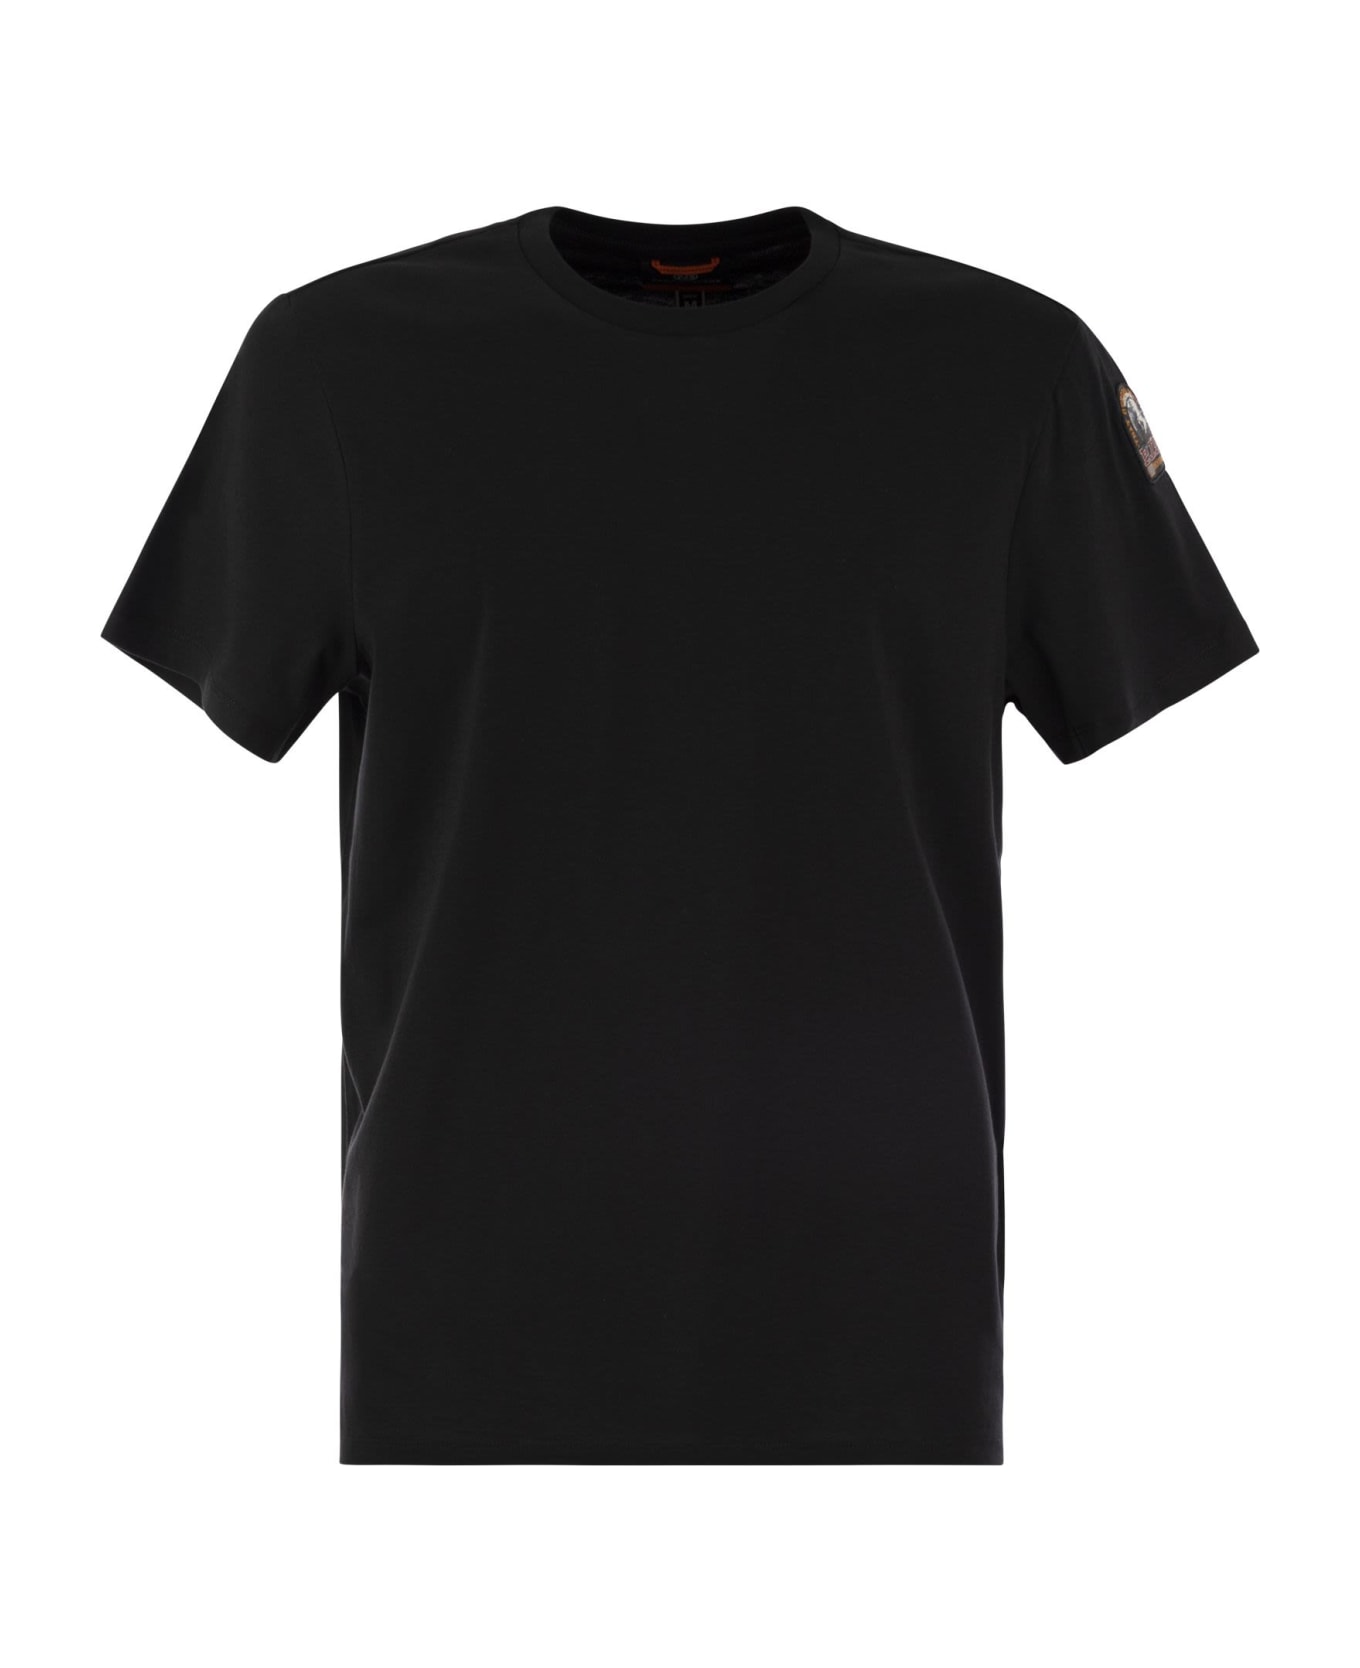 Parajumpers Shispare Tee - Cotton Jersey T-shirt - Black